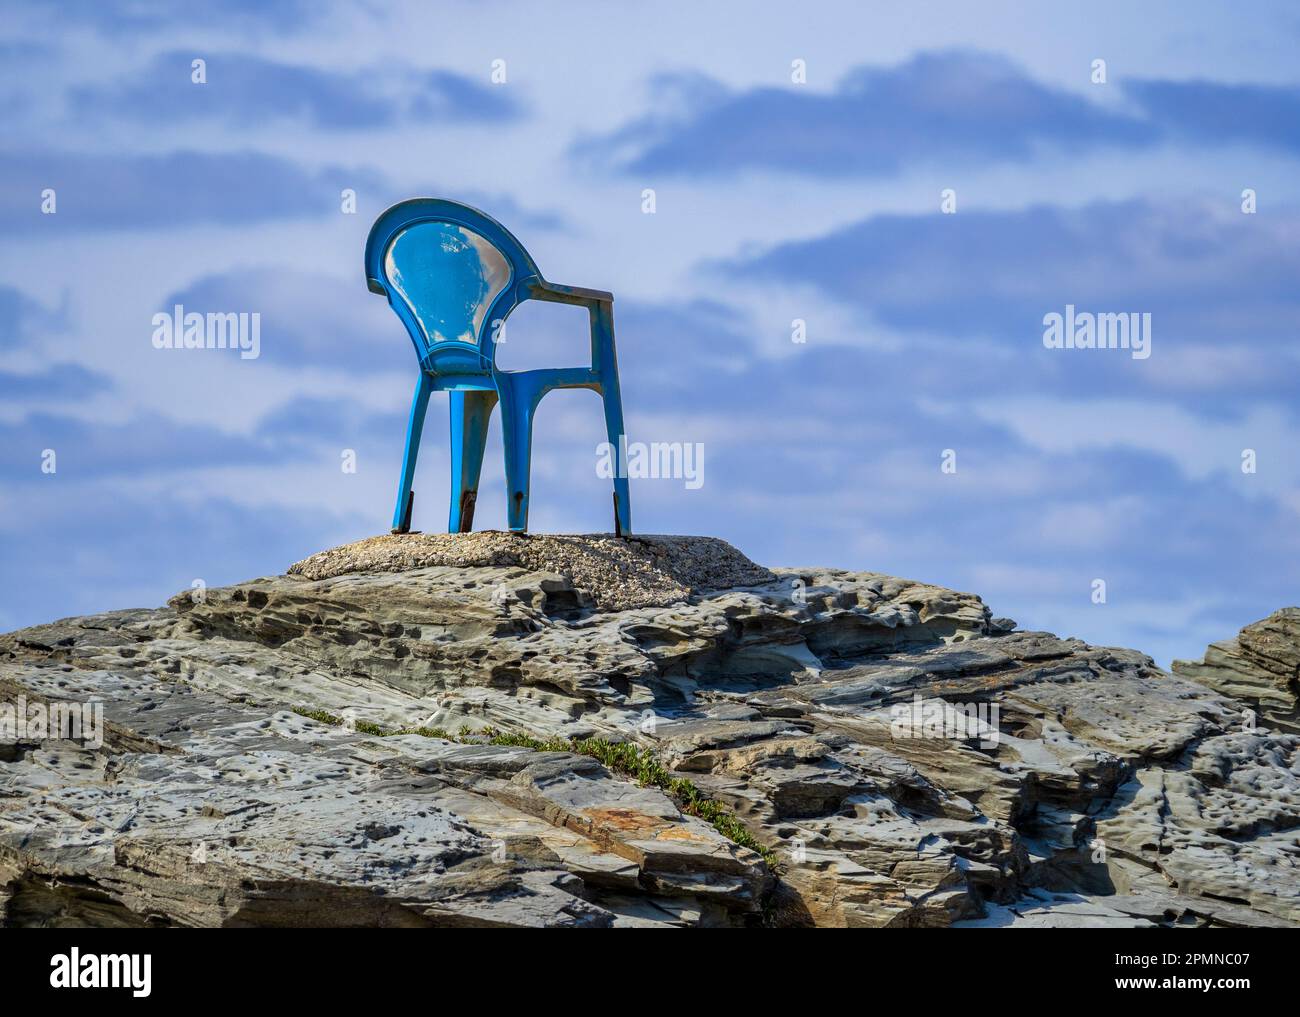 A watcher empty chair at beach Stock Photo